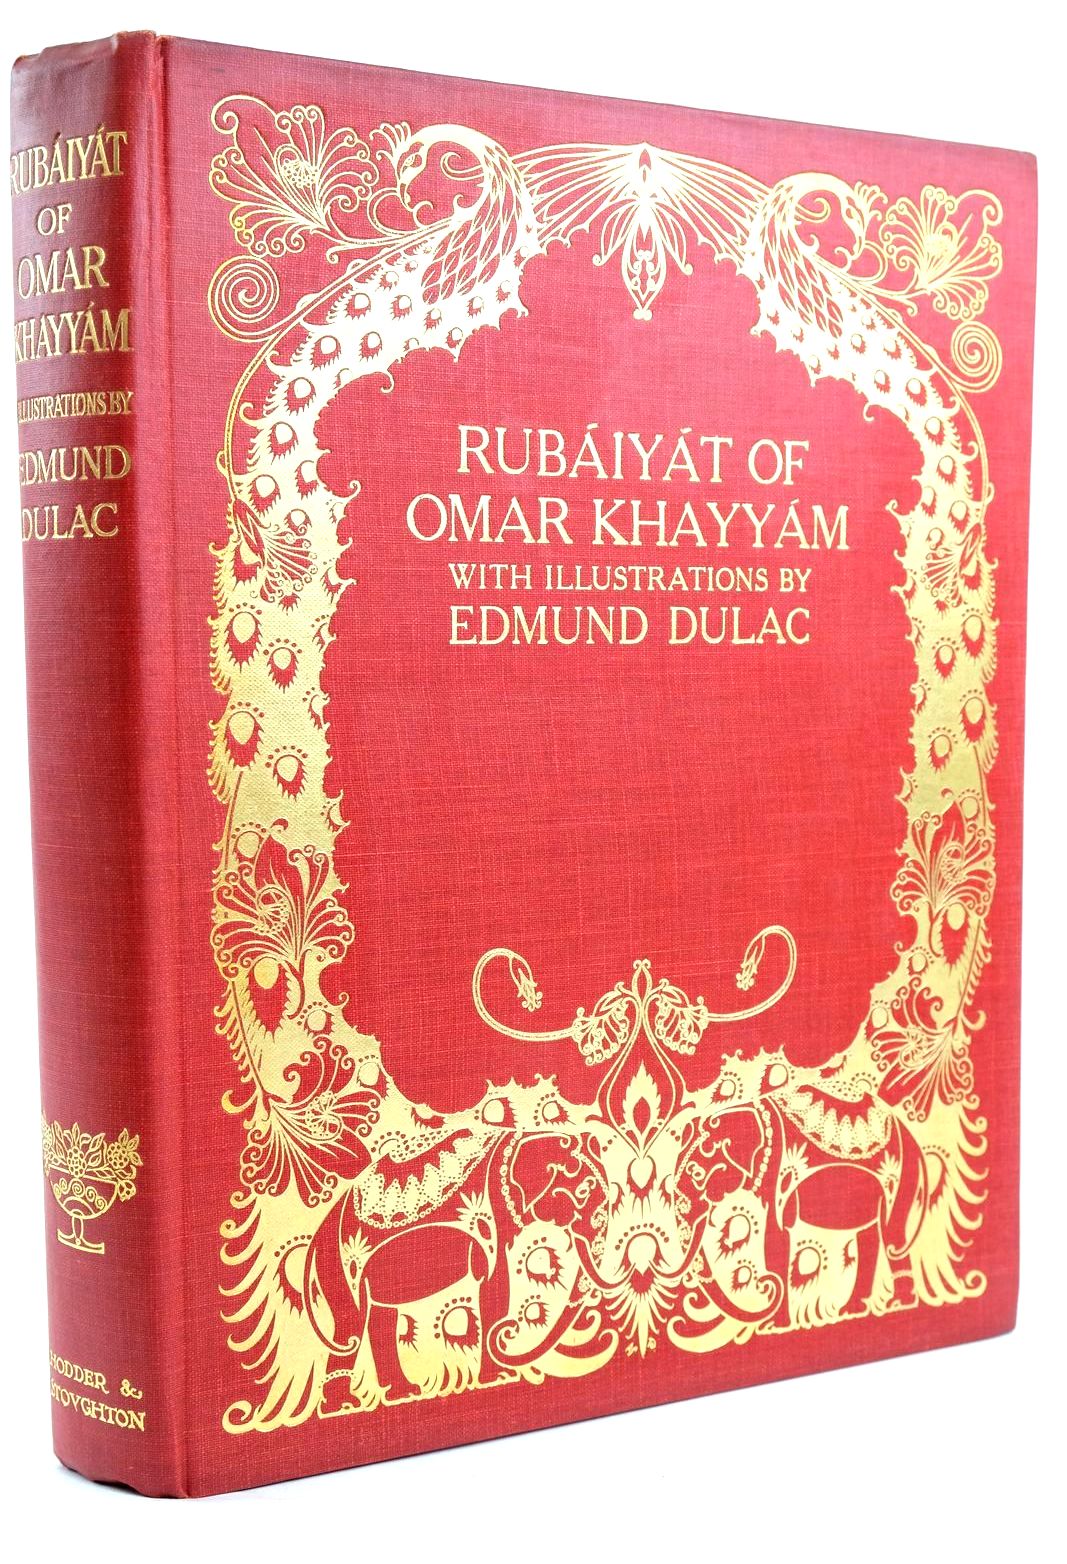 Photo of RUBAIYAT OF OMAR KHAYYAM written by Khayyam, Omar
Fitzgerald, Edward illustrated by Dulac, Edmund published by Hodder & Stoughton (STOCK CODE: 1319525)  for sale by Stella & Rose's Books